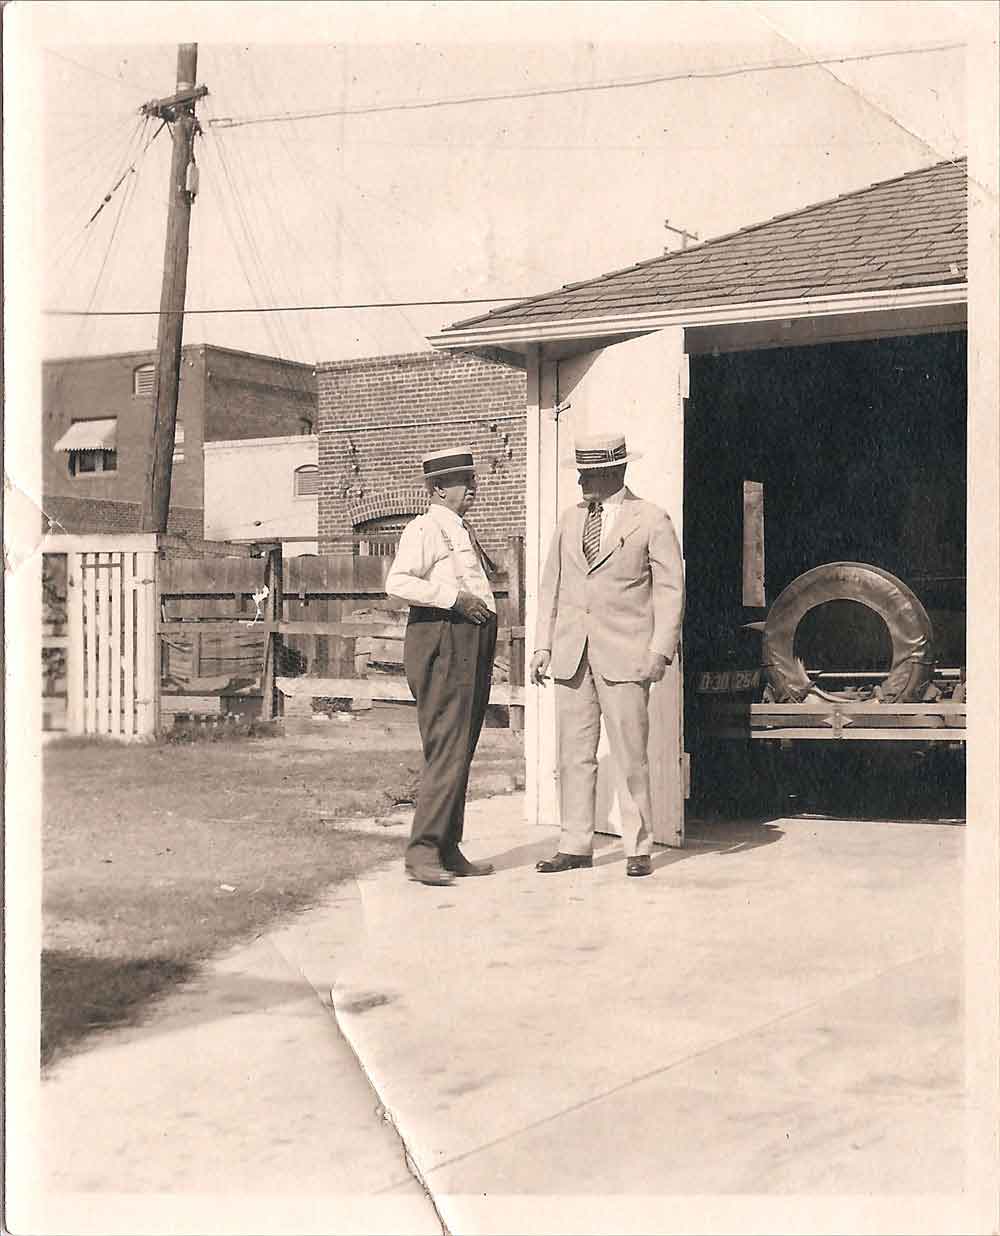 (HTC.2010.8.12) - Two Men Converse near a Garage, c. 1920s